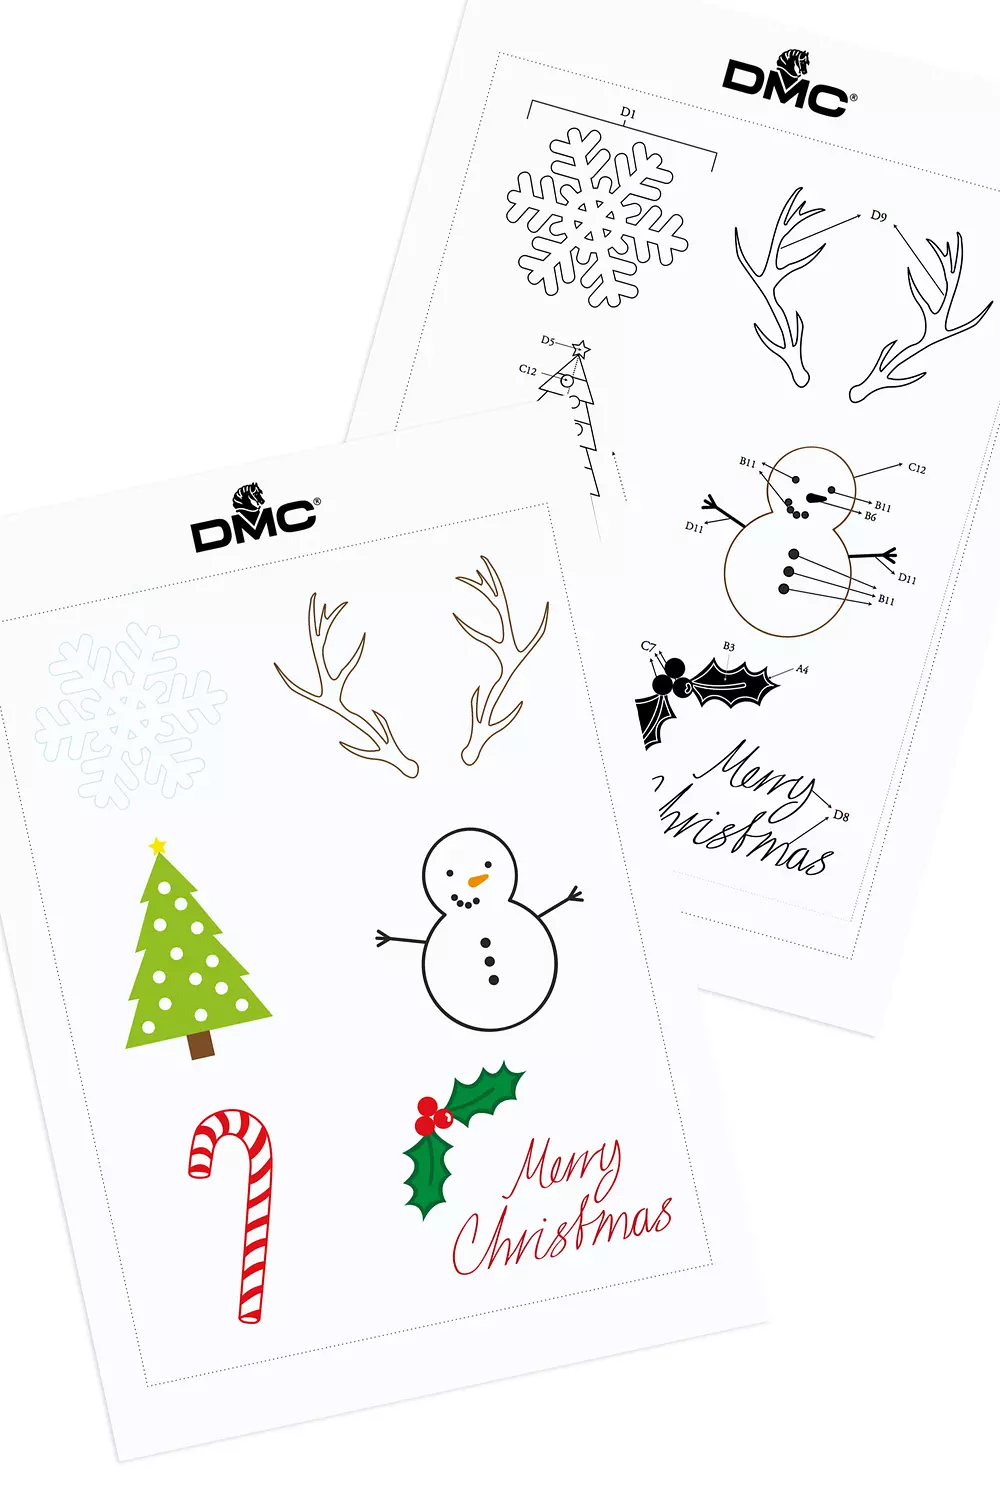 Stitchable Festive Gift Tags - DMC